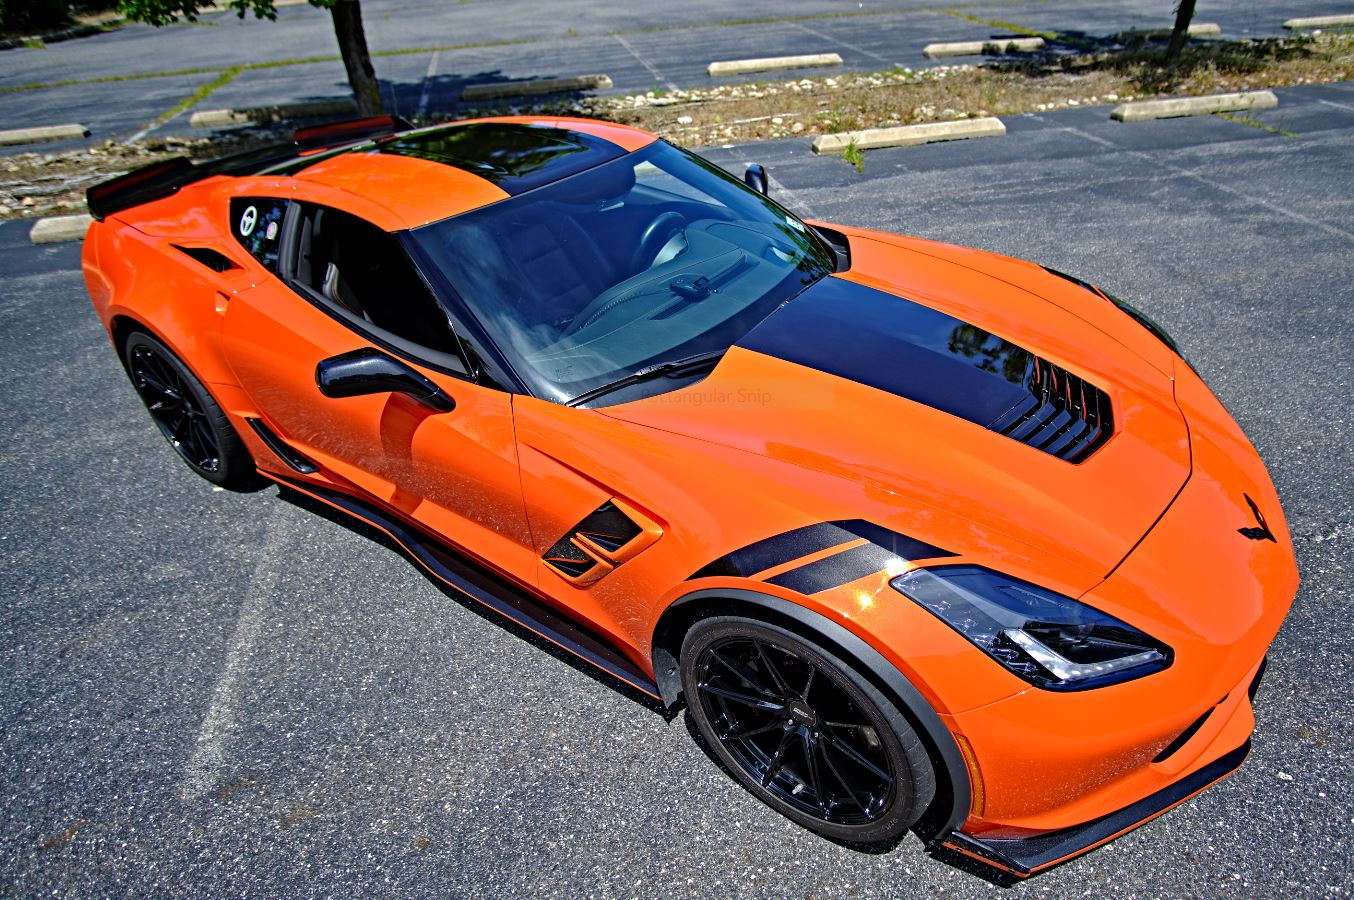 Fs For Sale C7 2019 Gs Sebring Orange For Sale Corvetteforum